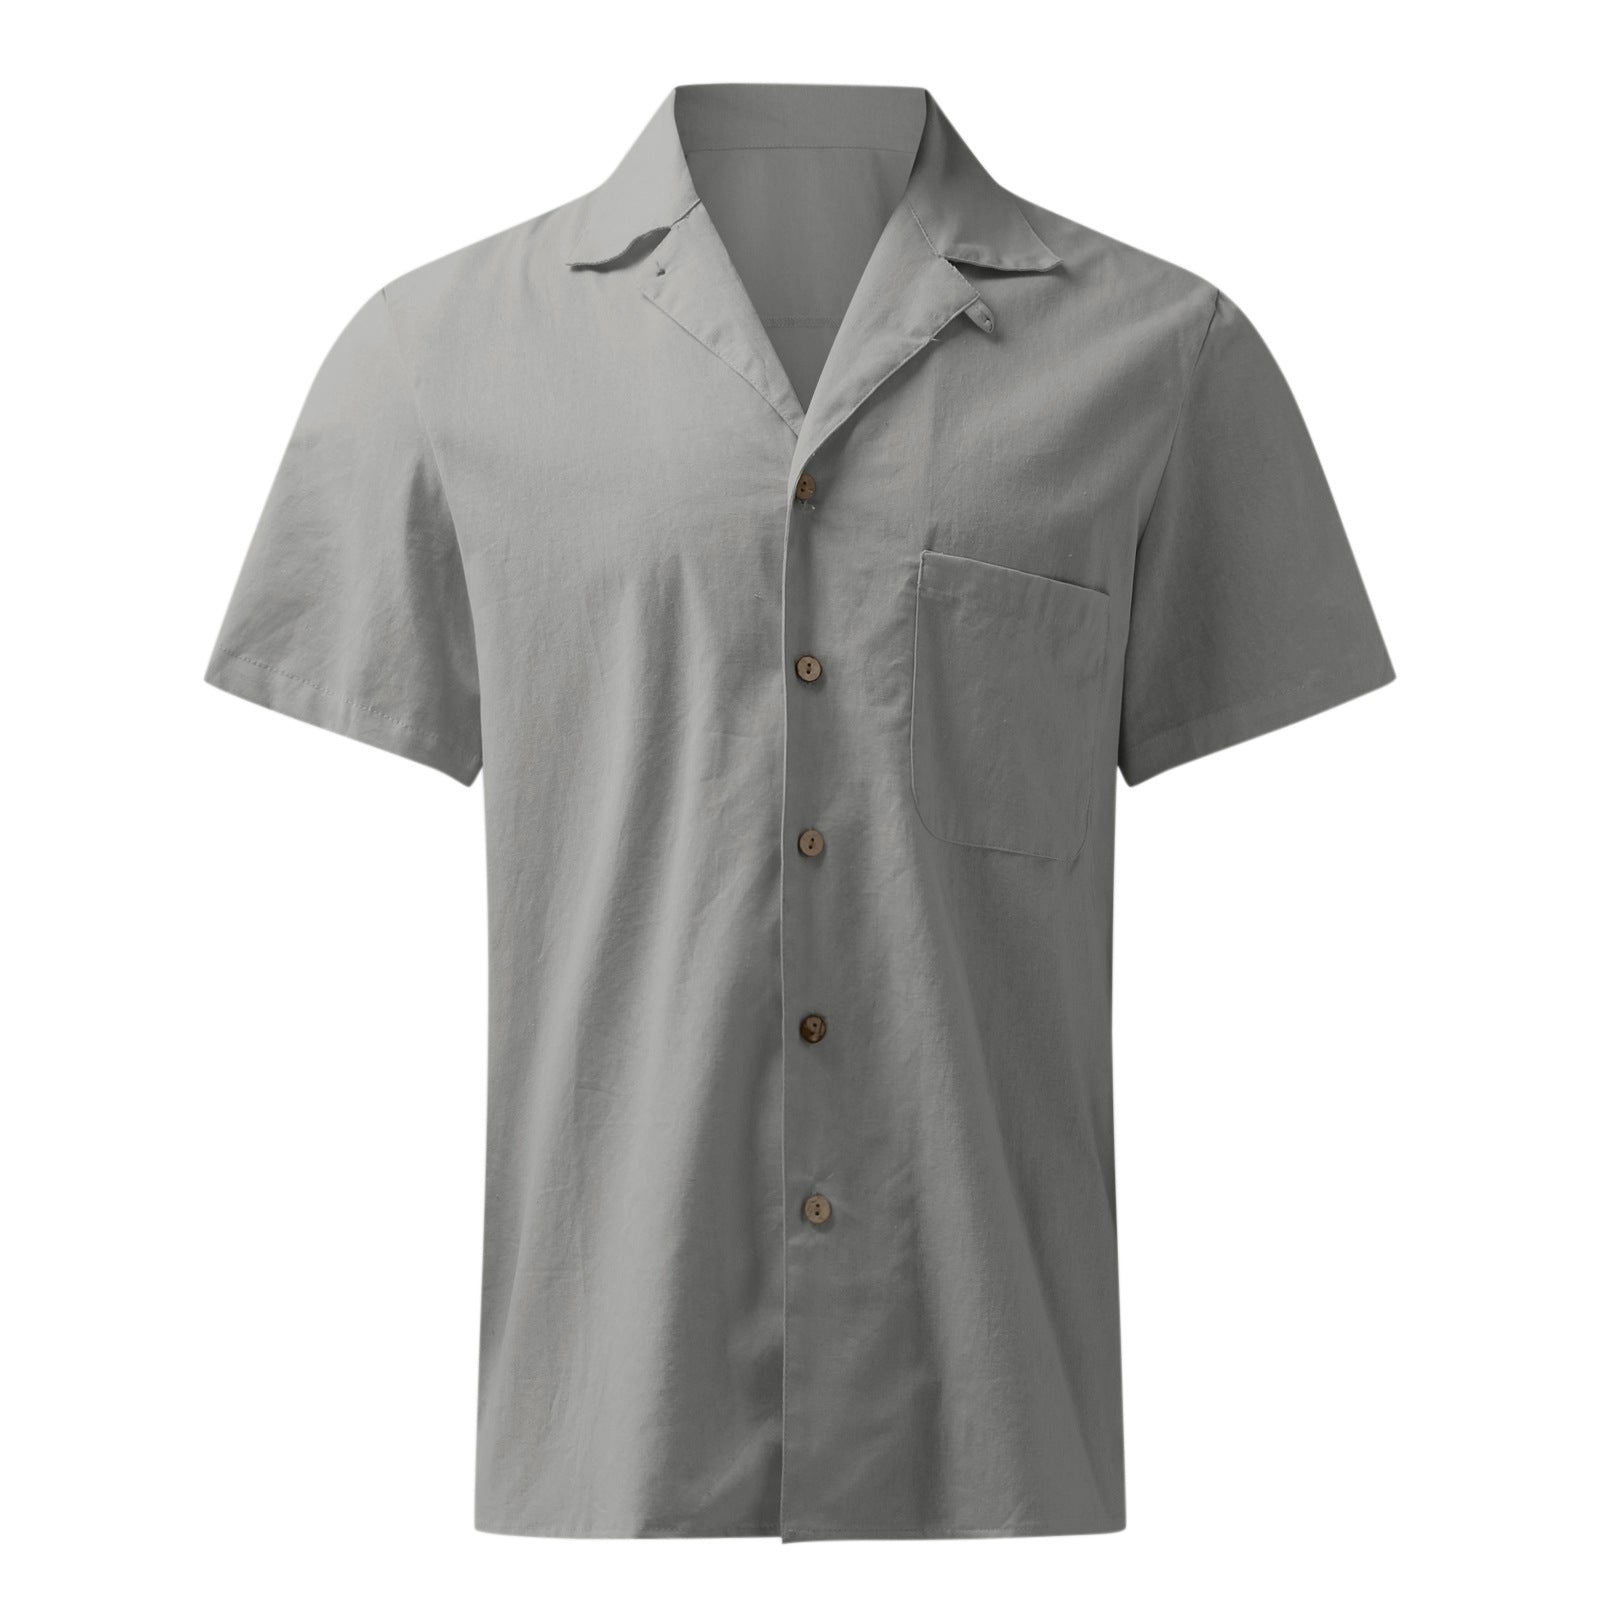 Casual Linen Short Sleeves Shirts for Men-Shirts & Tops-Gray-S-Free Shipping at meselling99